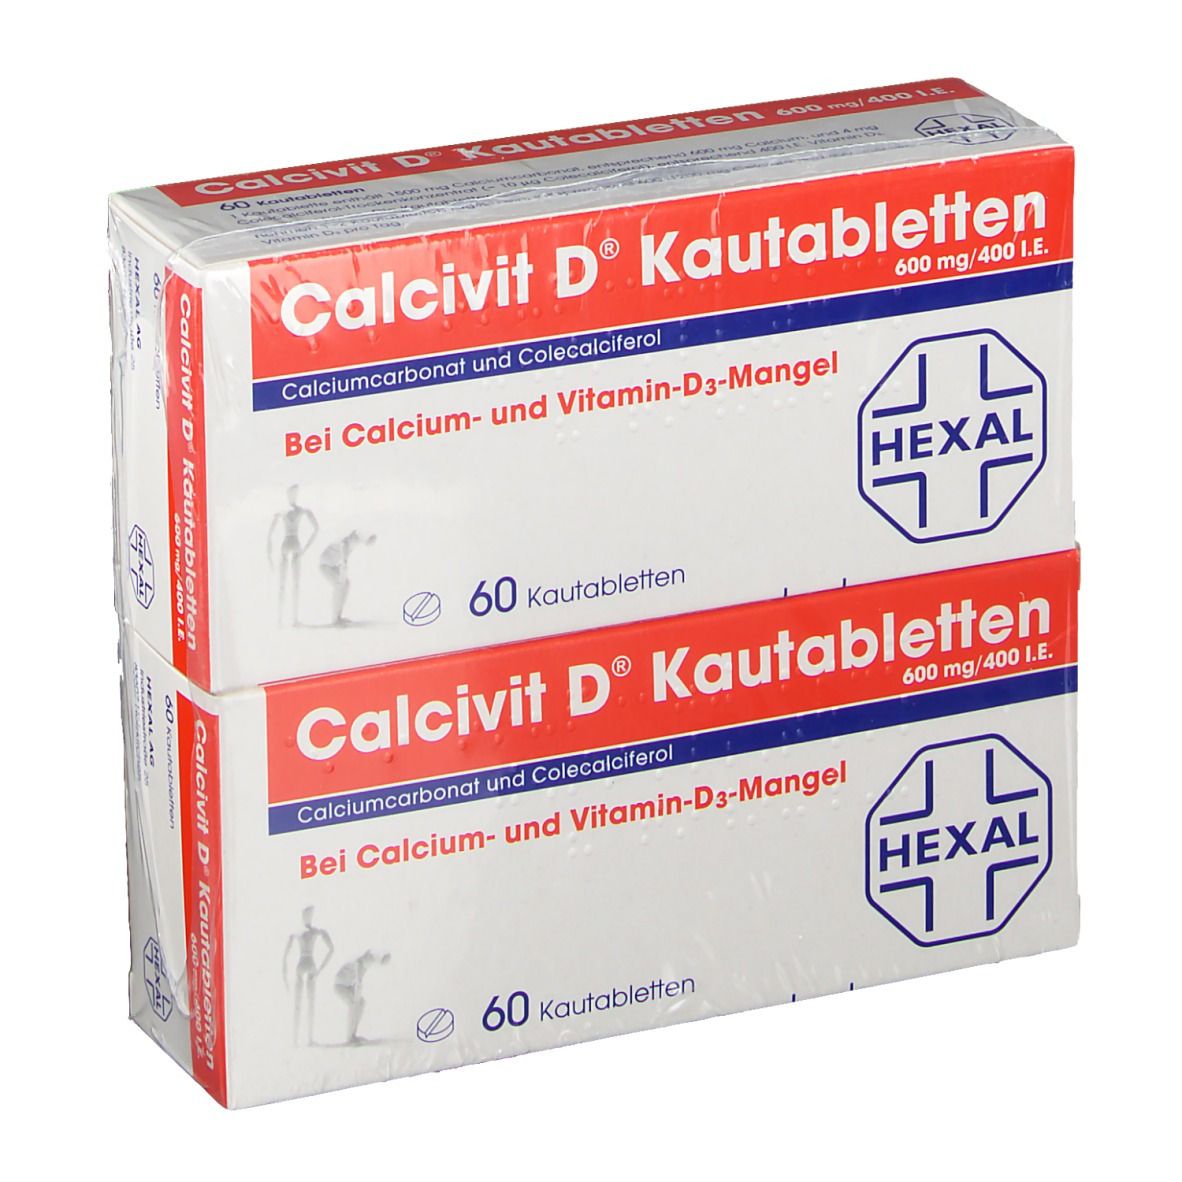 Calcivit D® Kautabletten, 600 mg/400 I.e.